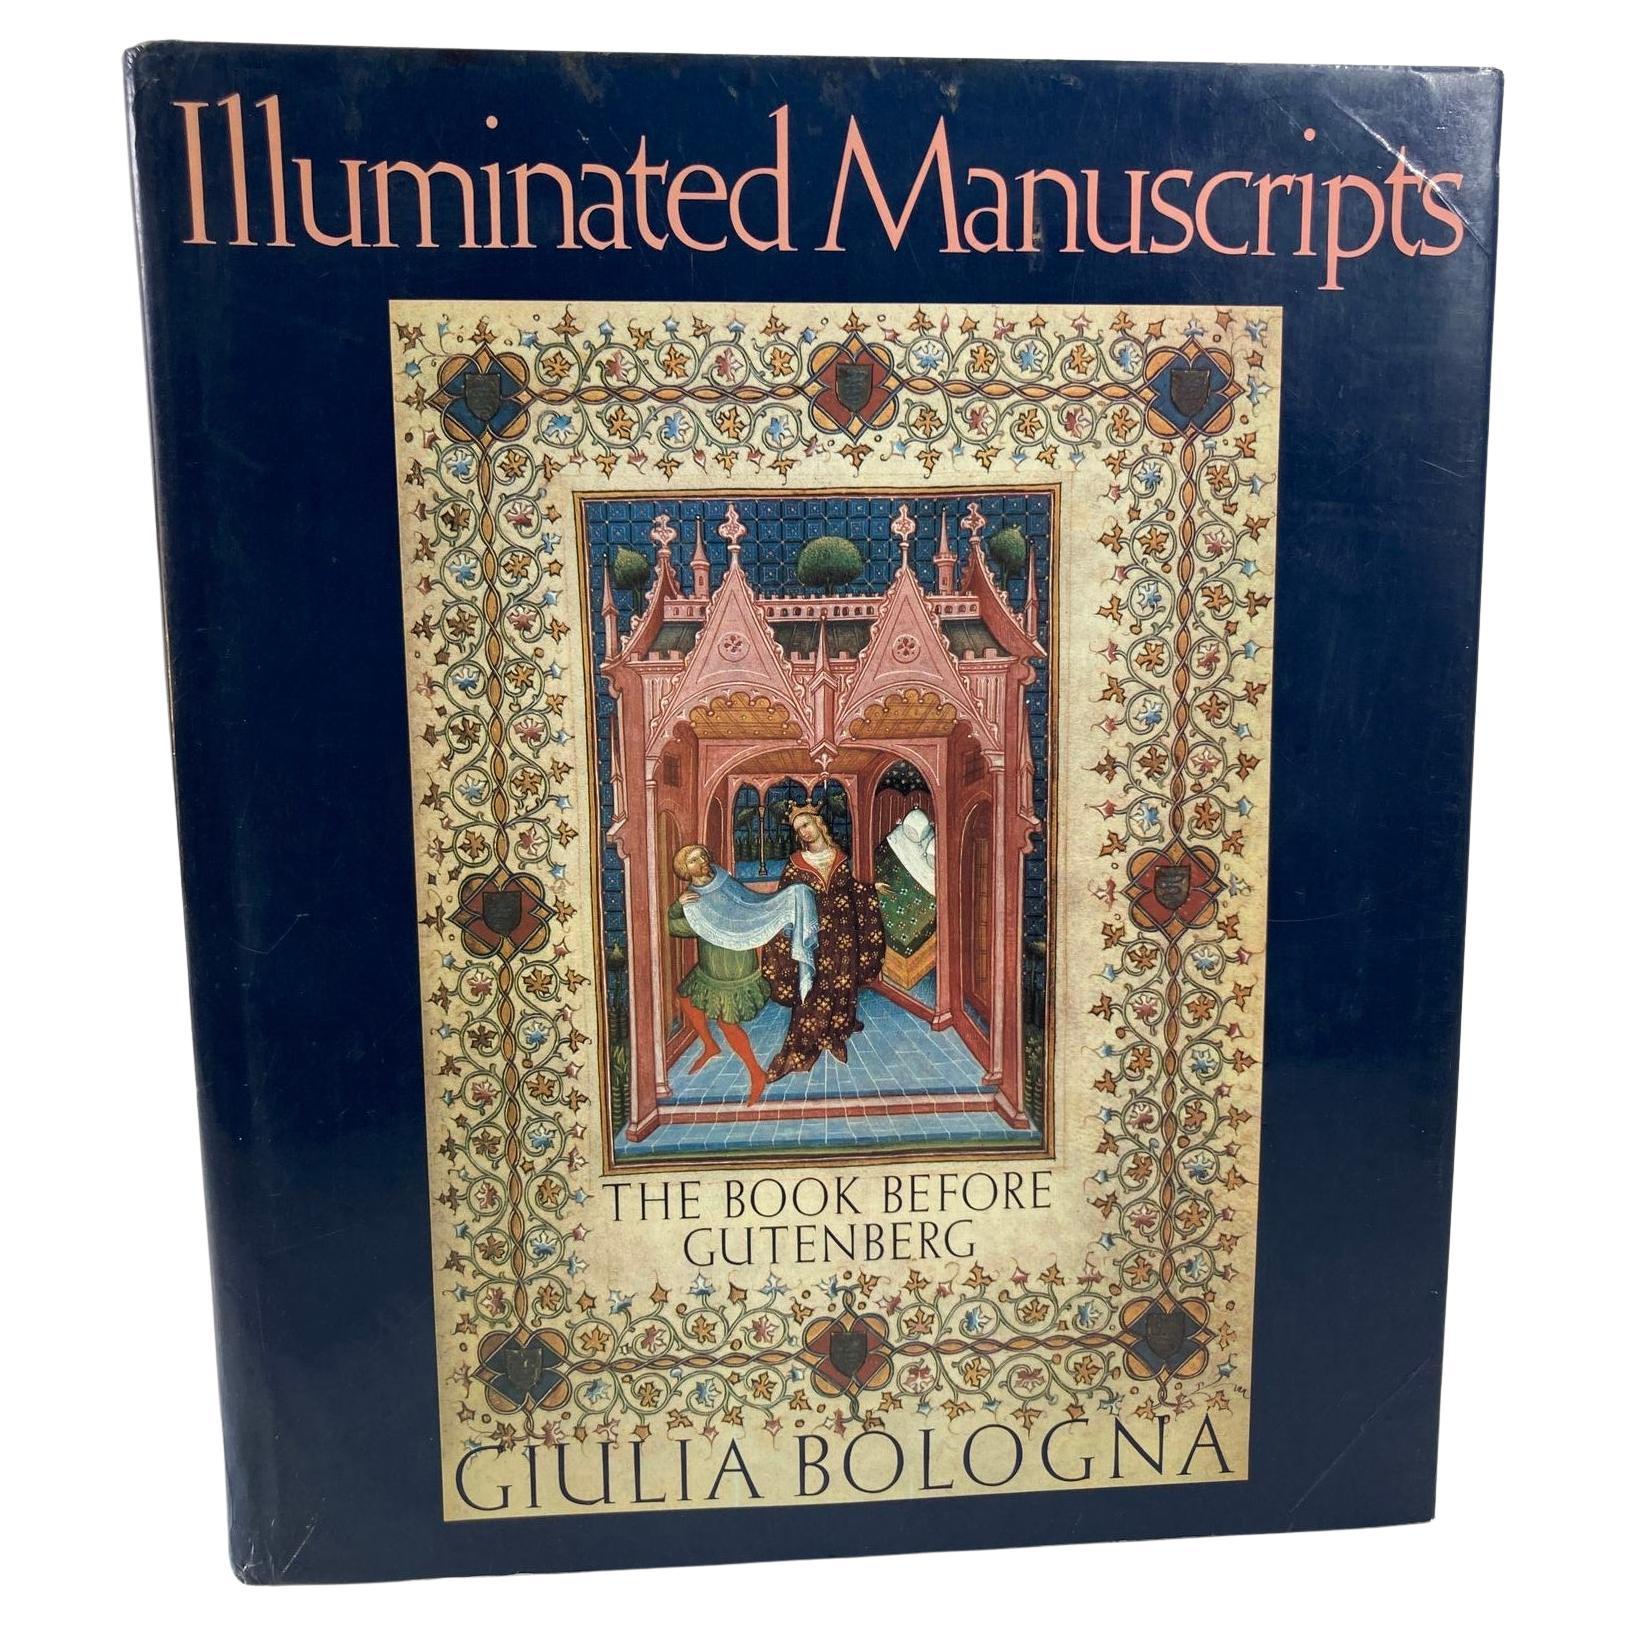 Illuminated Manuscripts, the Book before Gutenberg by Giulia Bologna